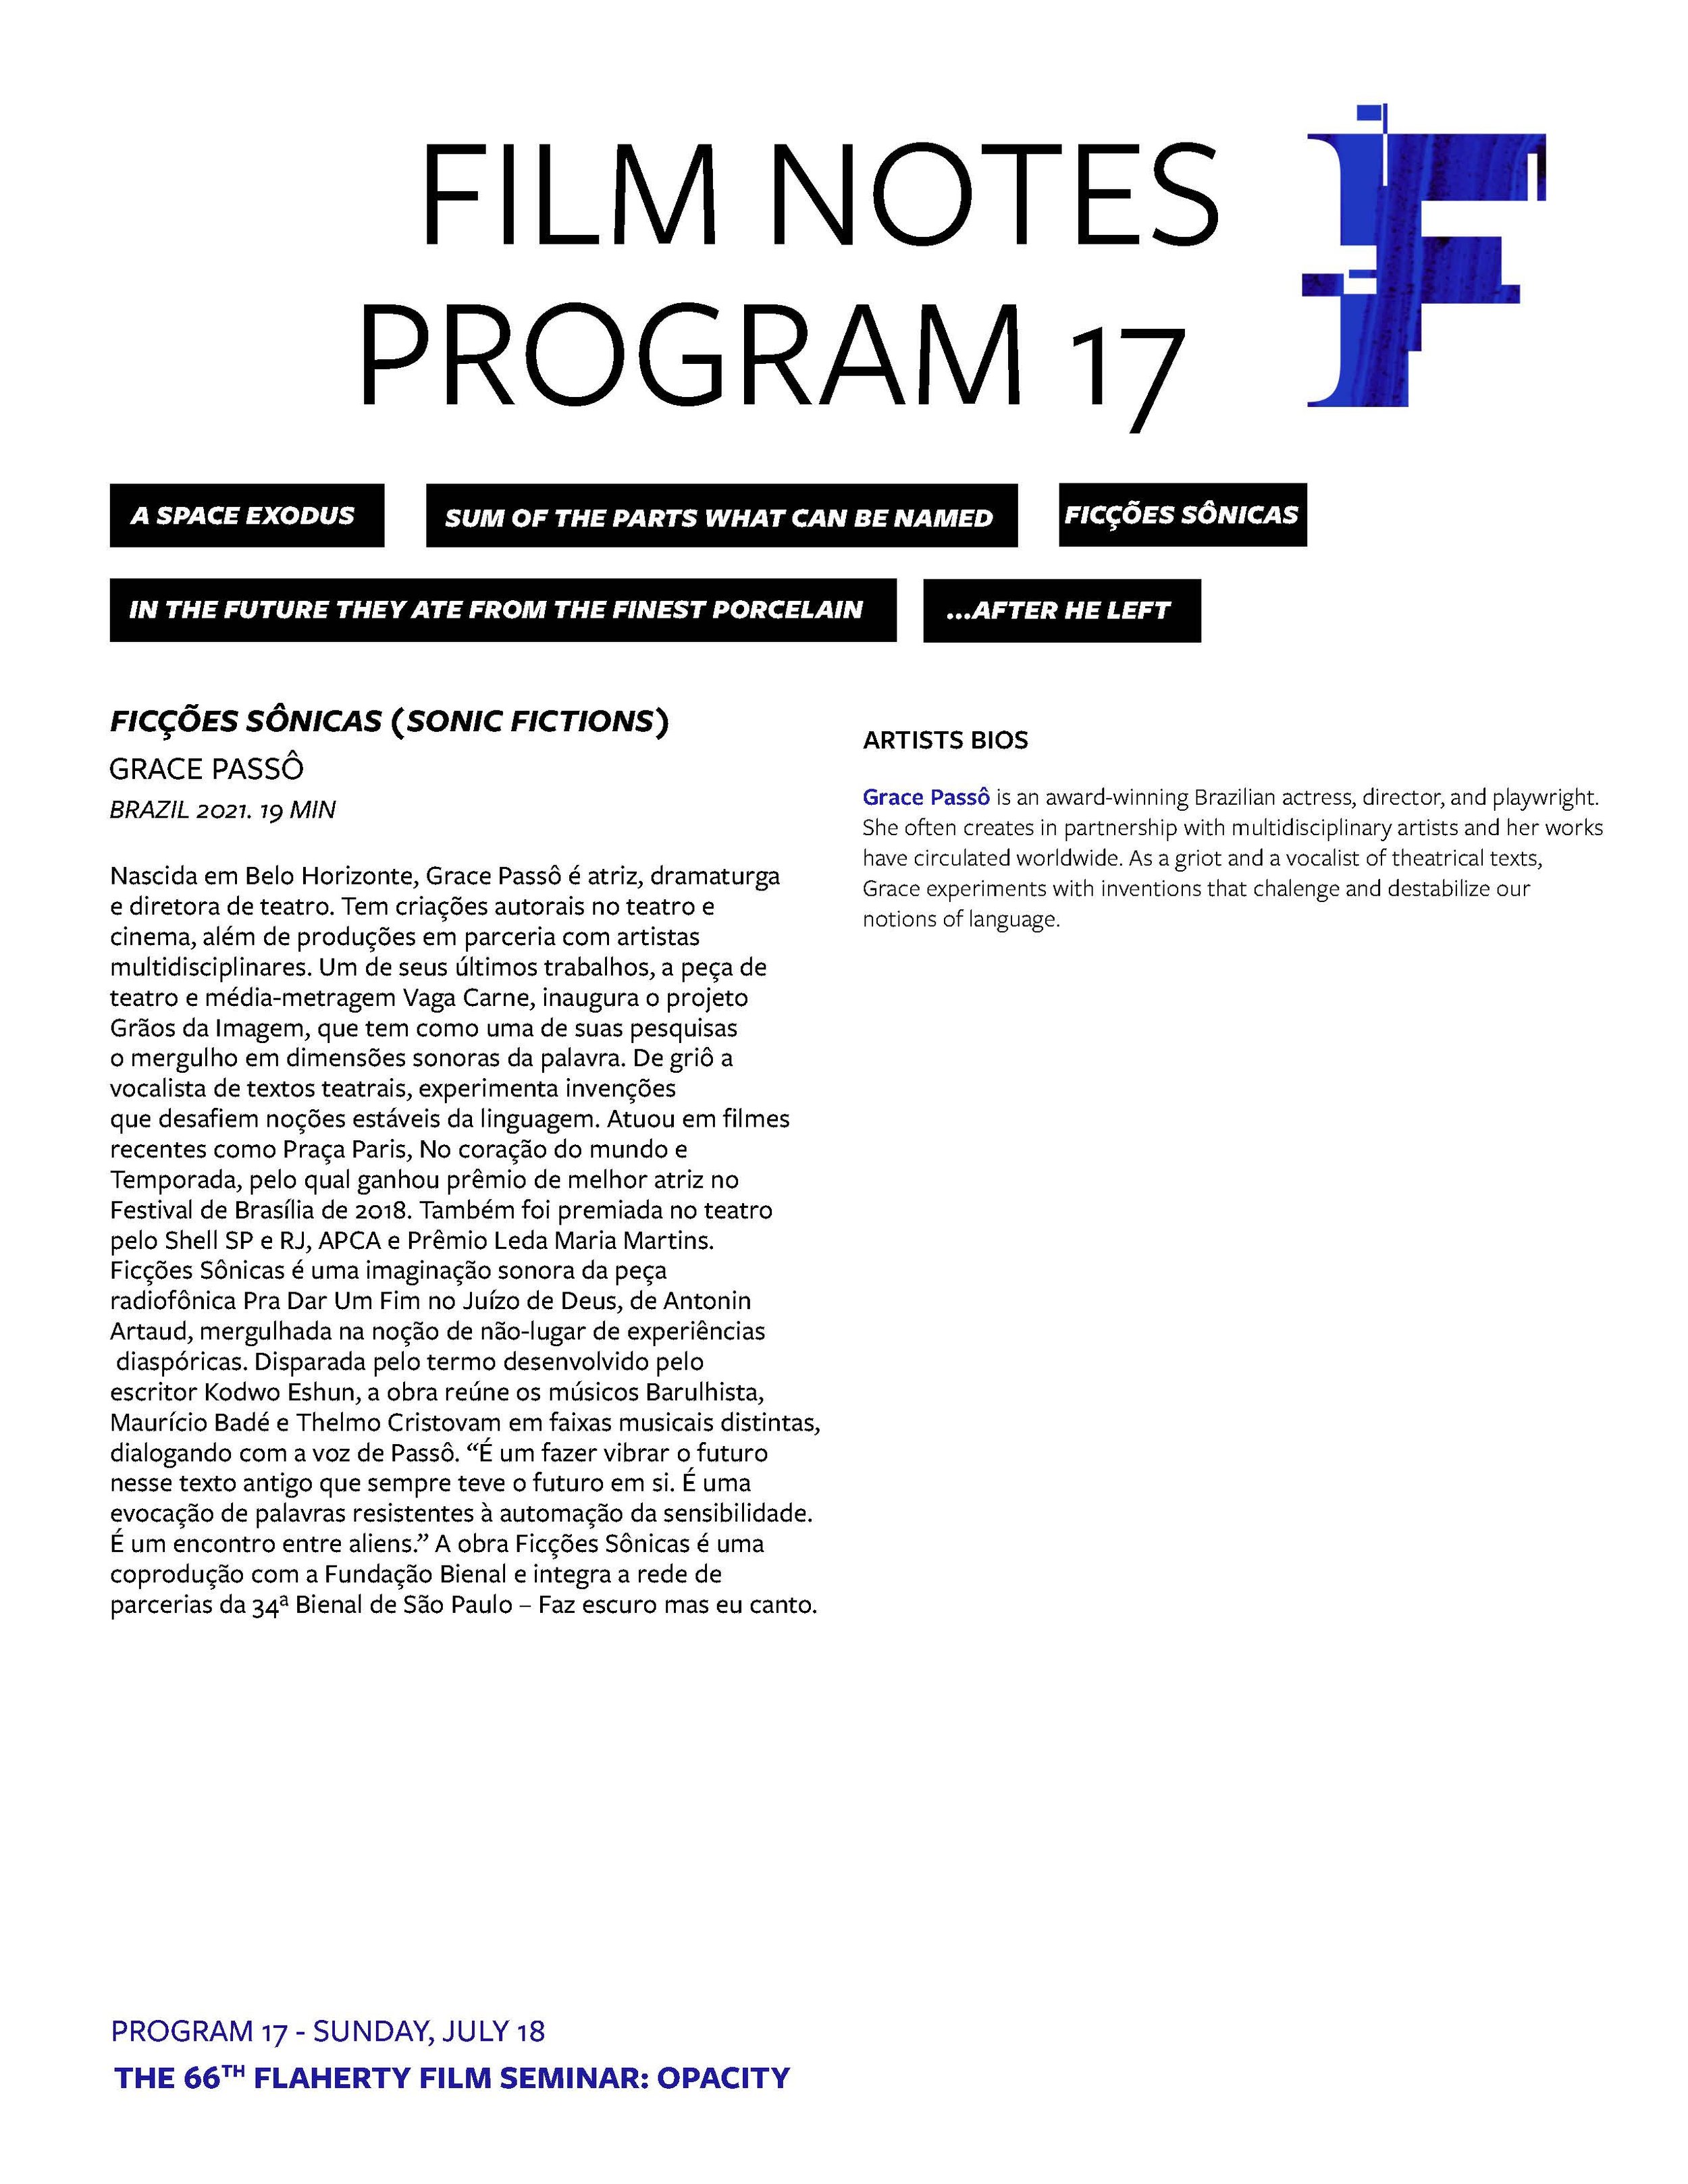 Program 17 Film Notes_Page_3.jpg